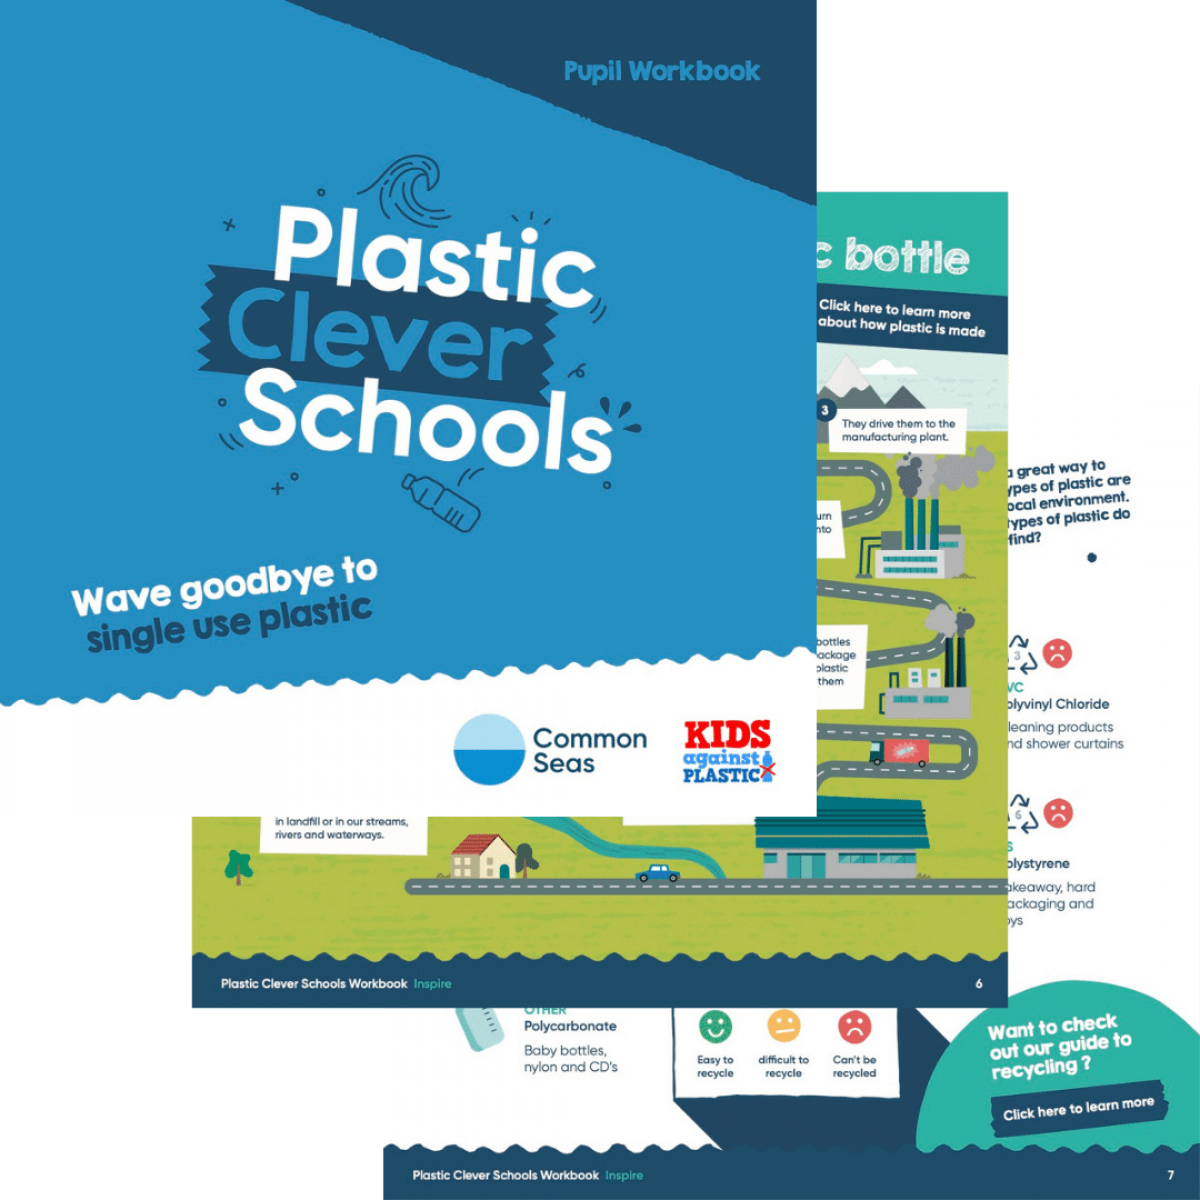 Plastic Clever Schools Awards